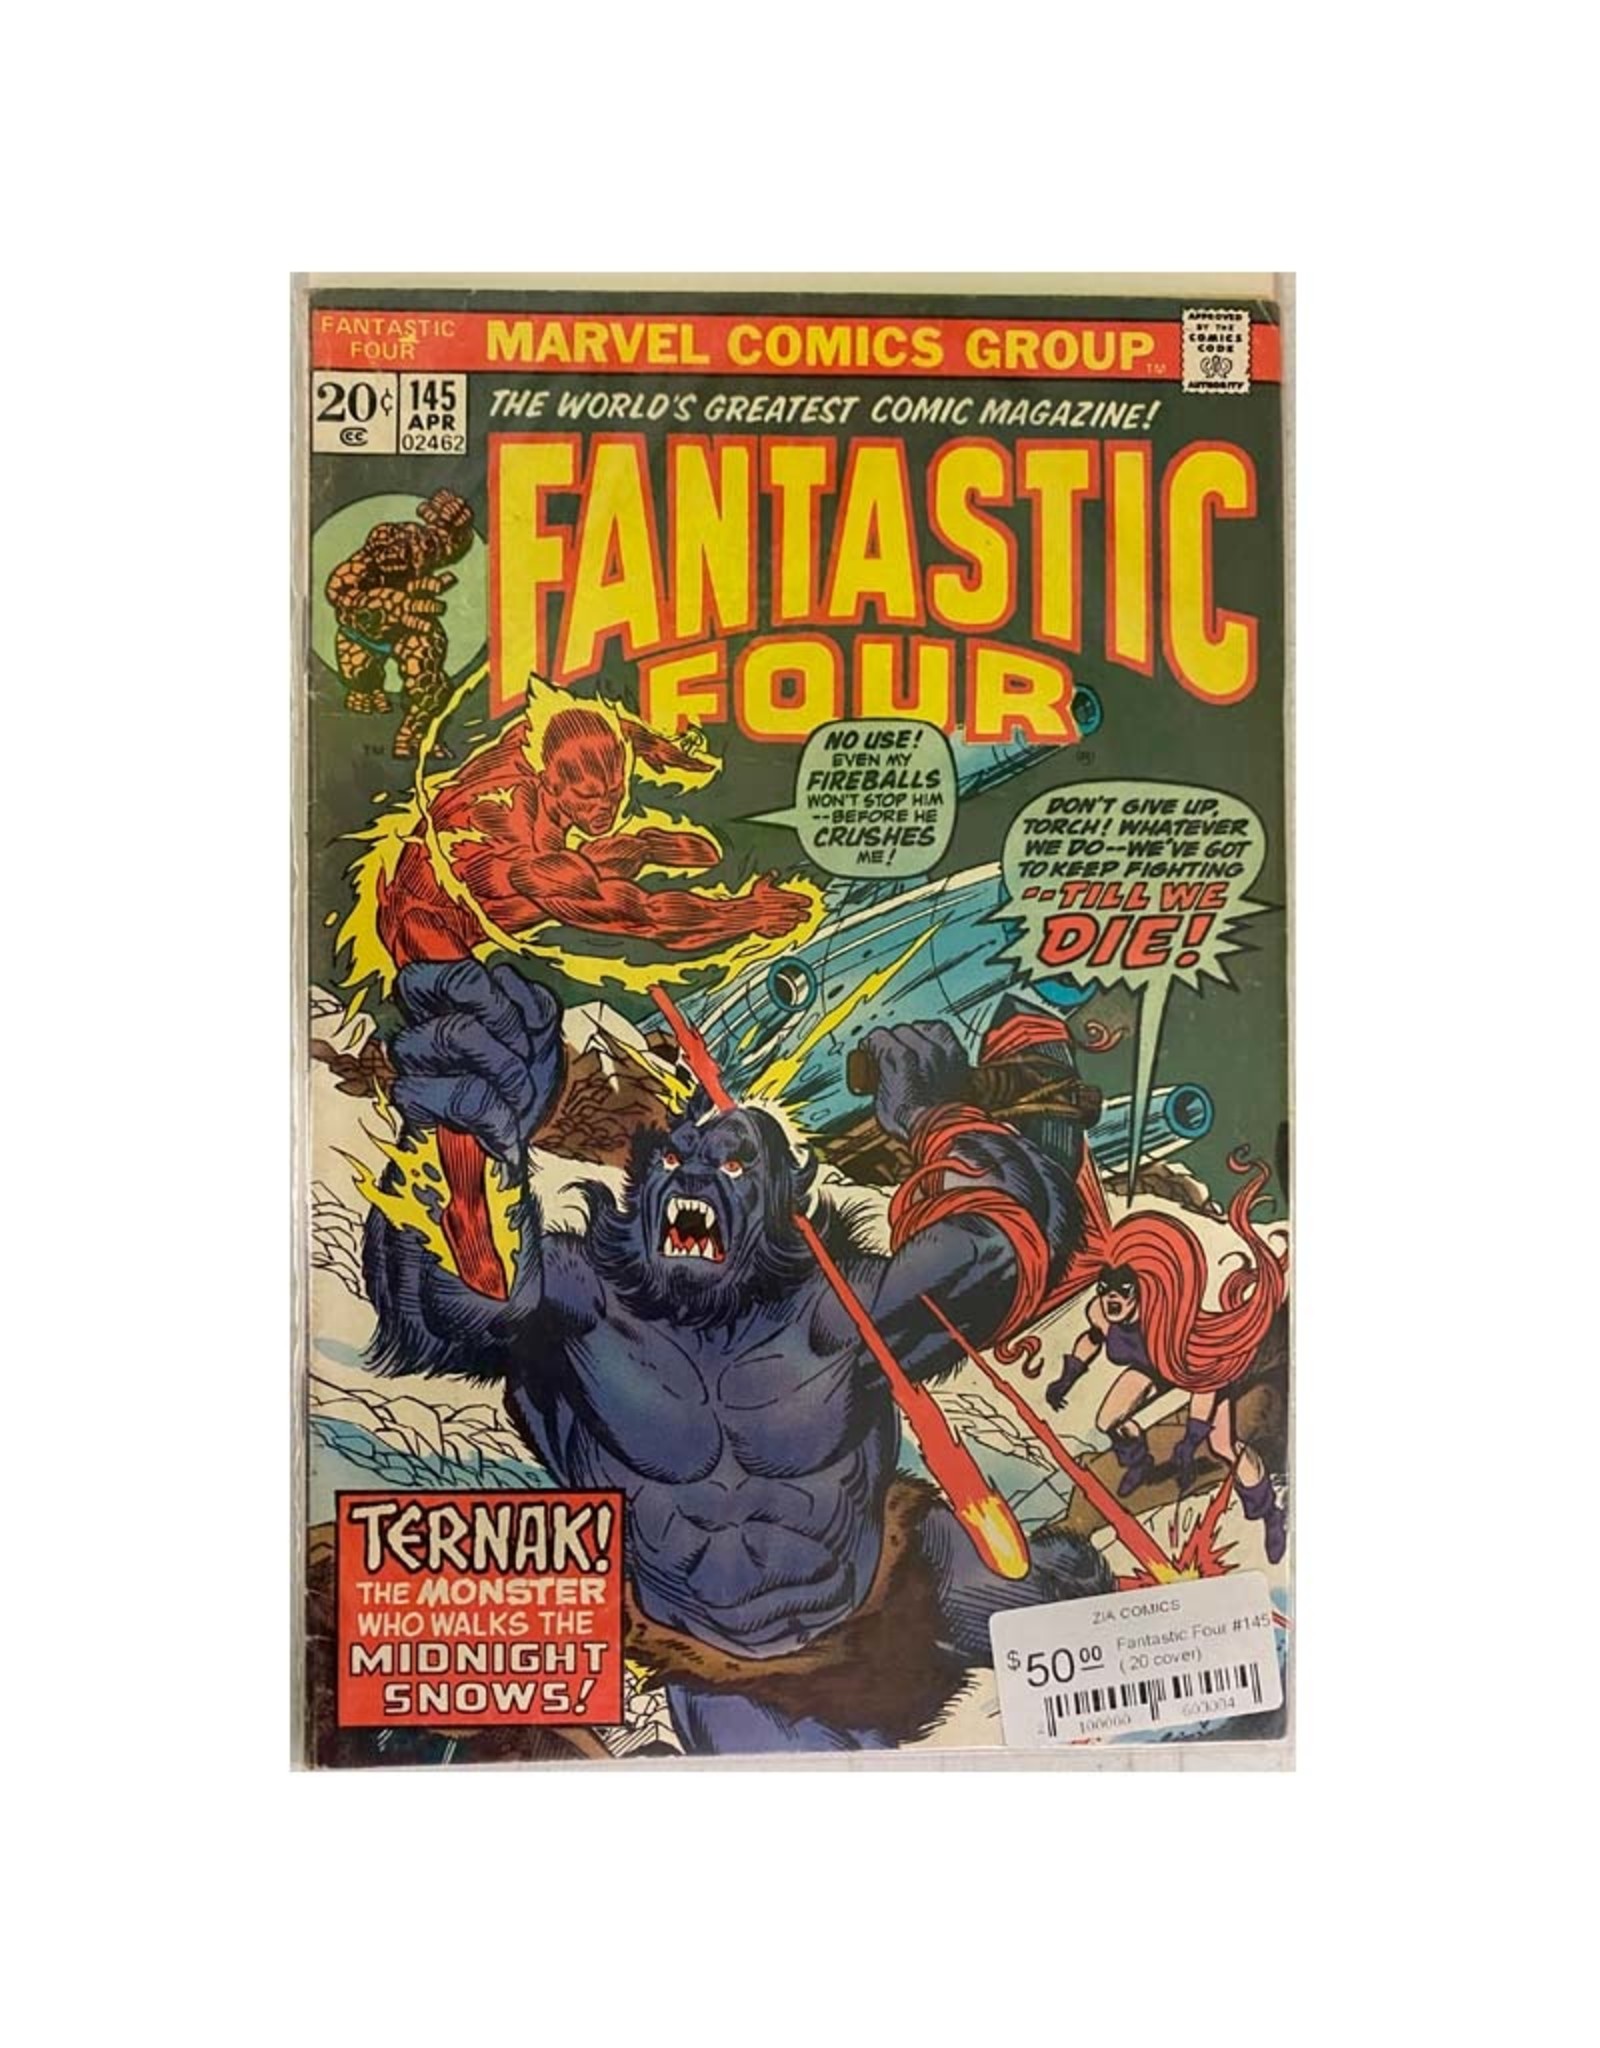 Marvel Comics Fantastic Four #145 (.20 cover)